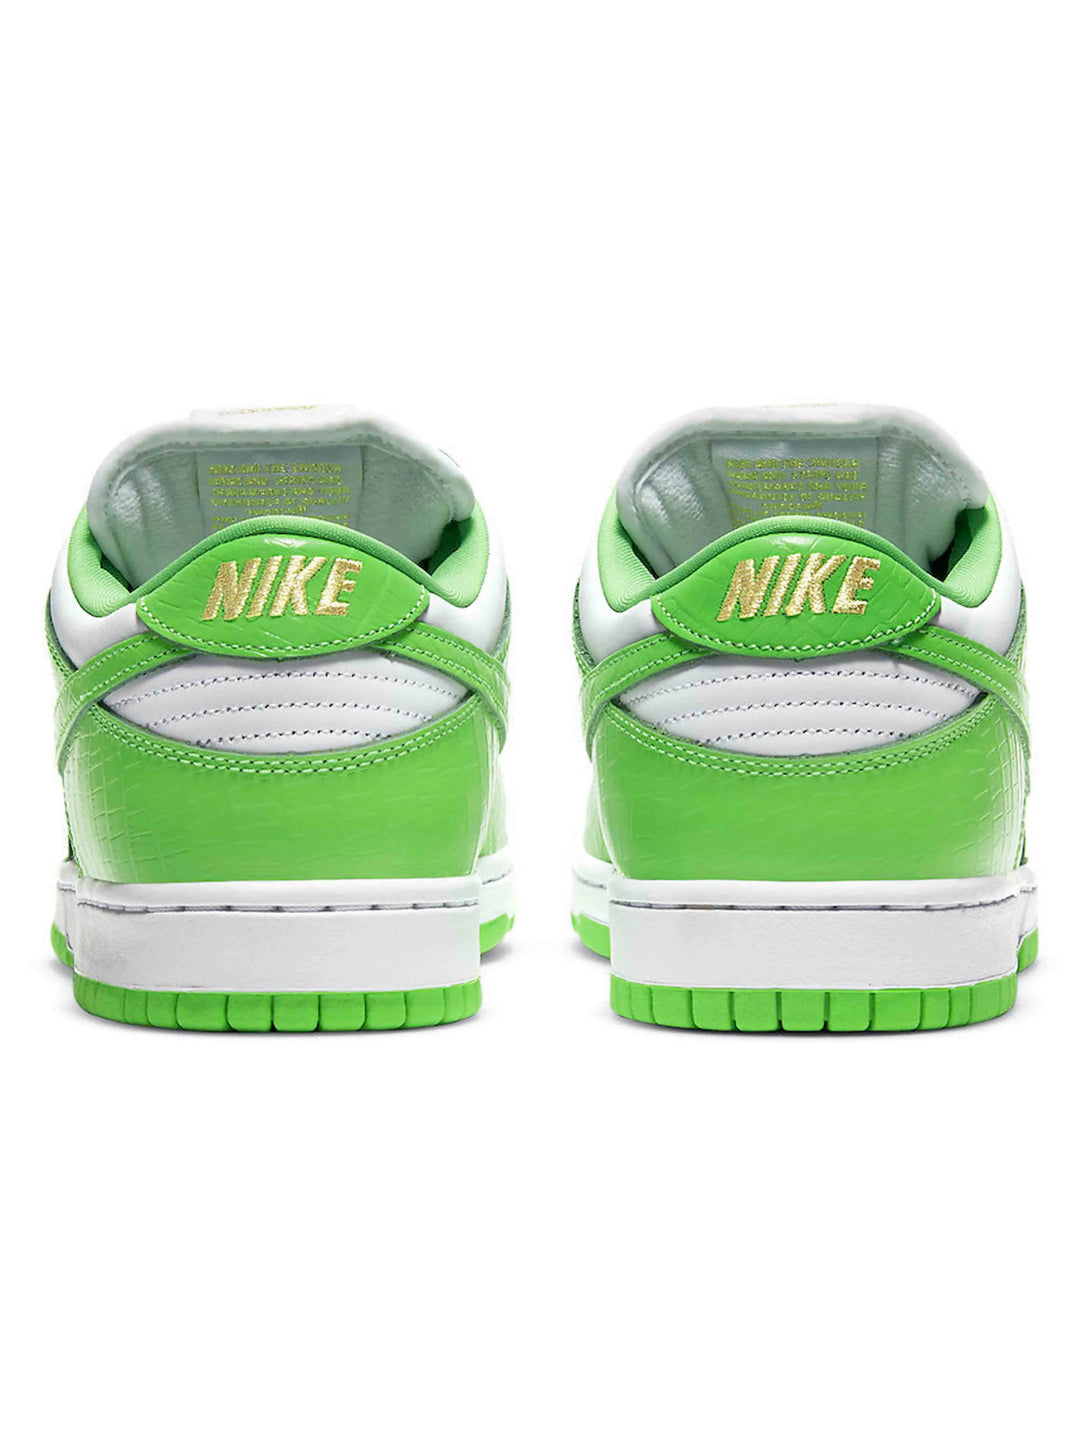 Nike SB Dunk Low Supreme Stars Mean Green [2021] Prior